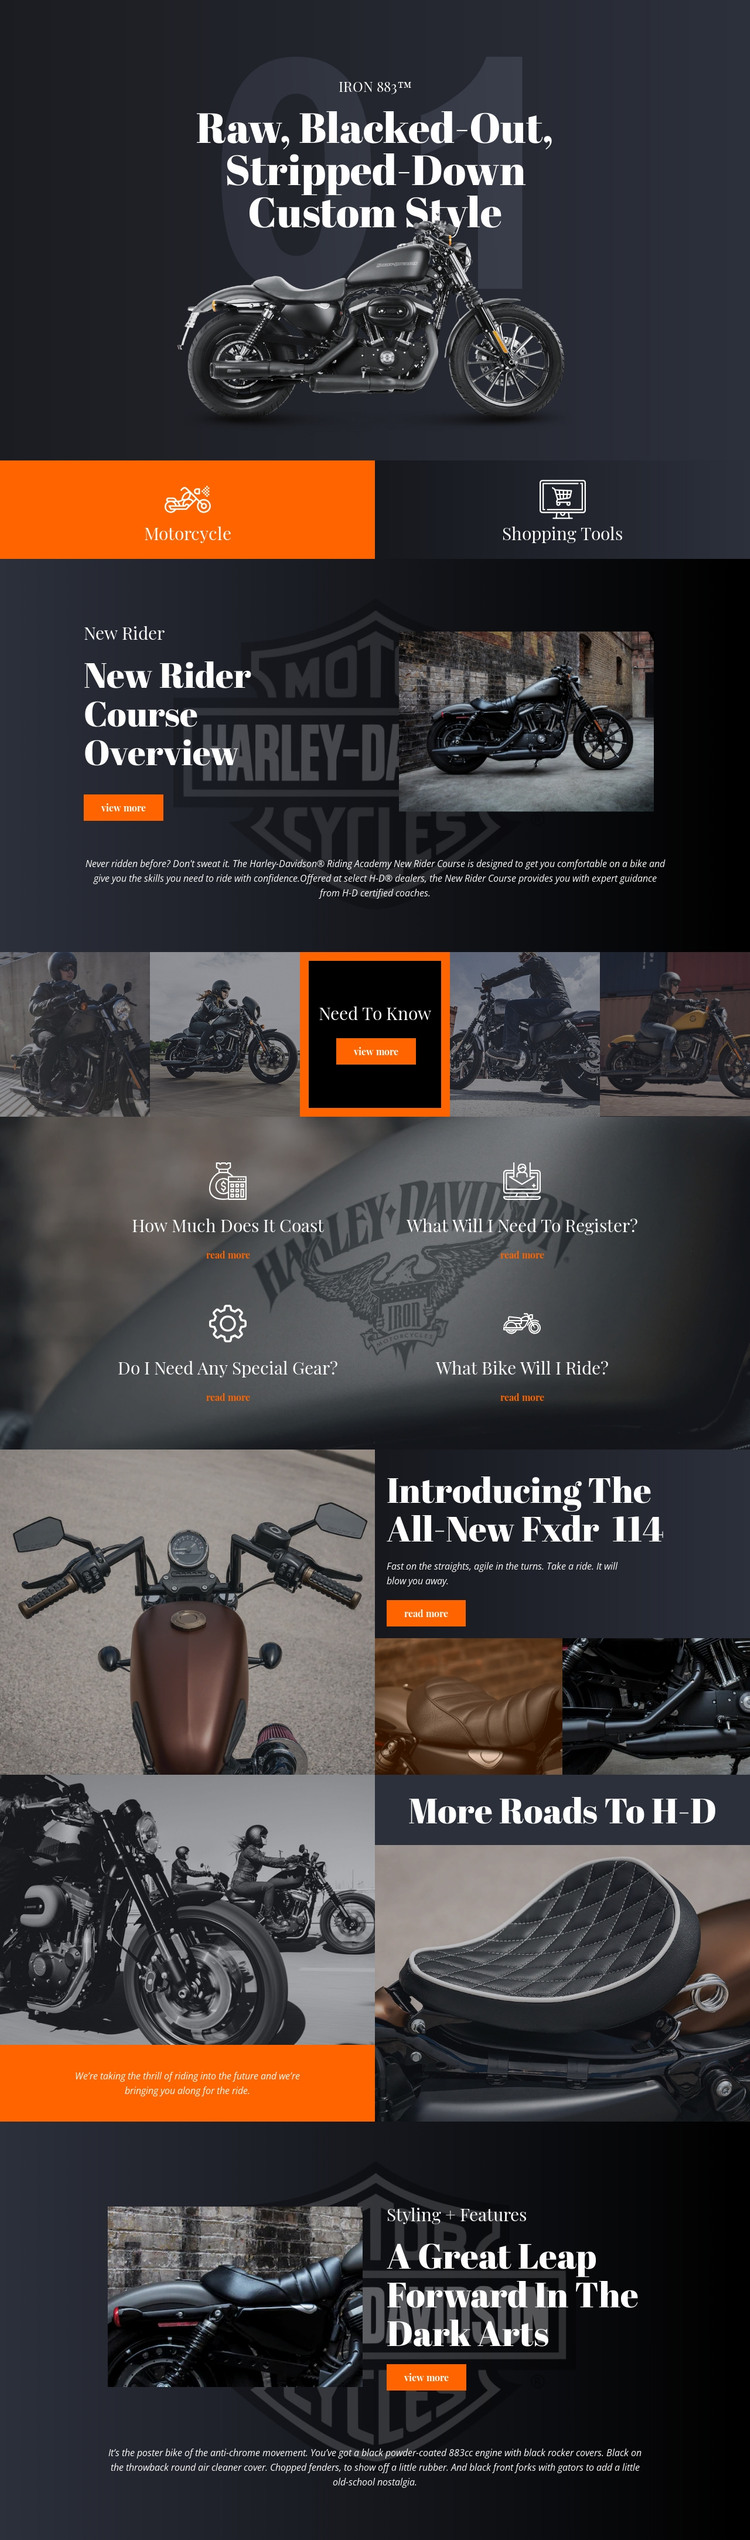 Harley Davidson HTML Template